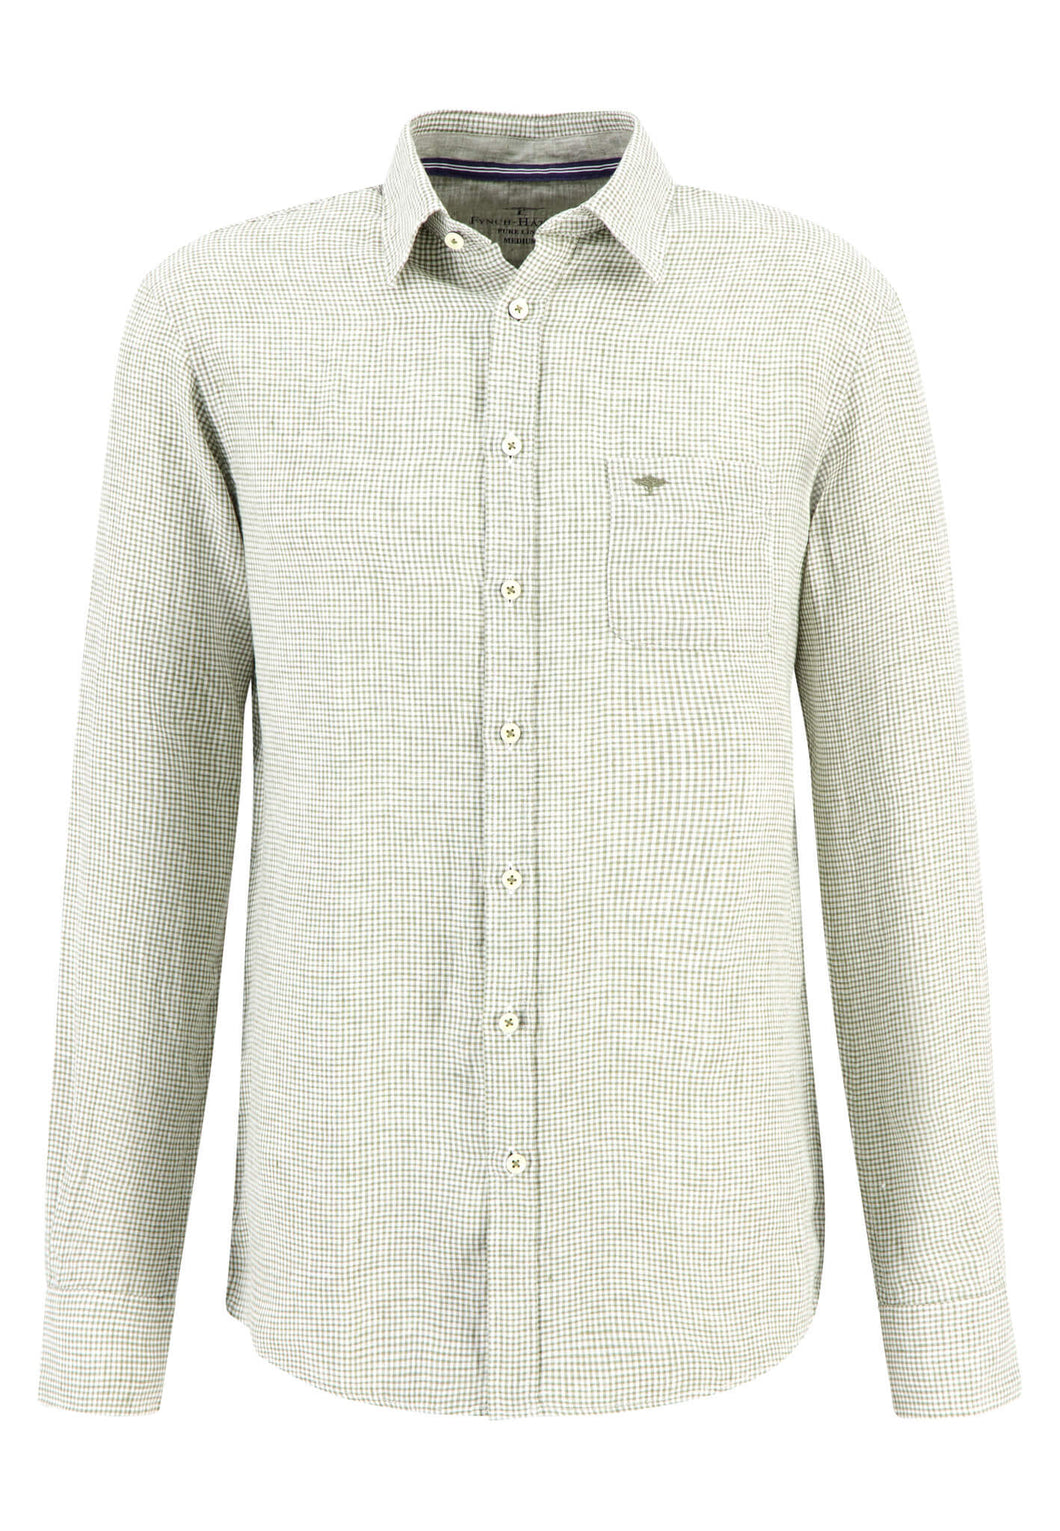 New Fynch Hatton Olive Check Linen Long Sleeve Shirt